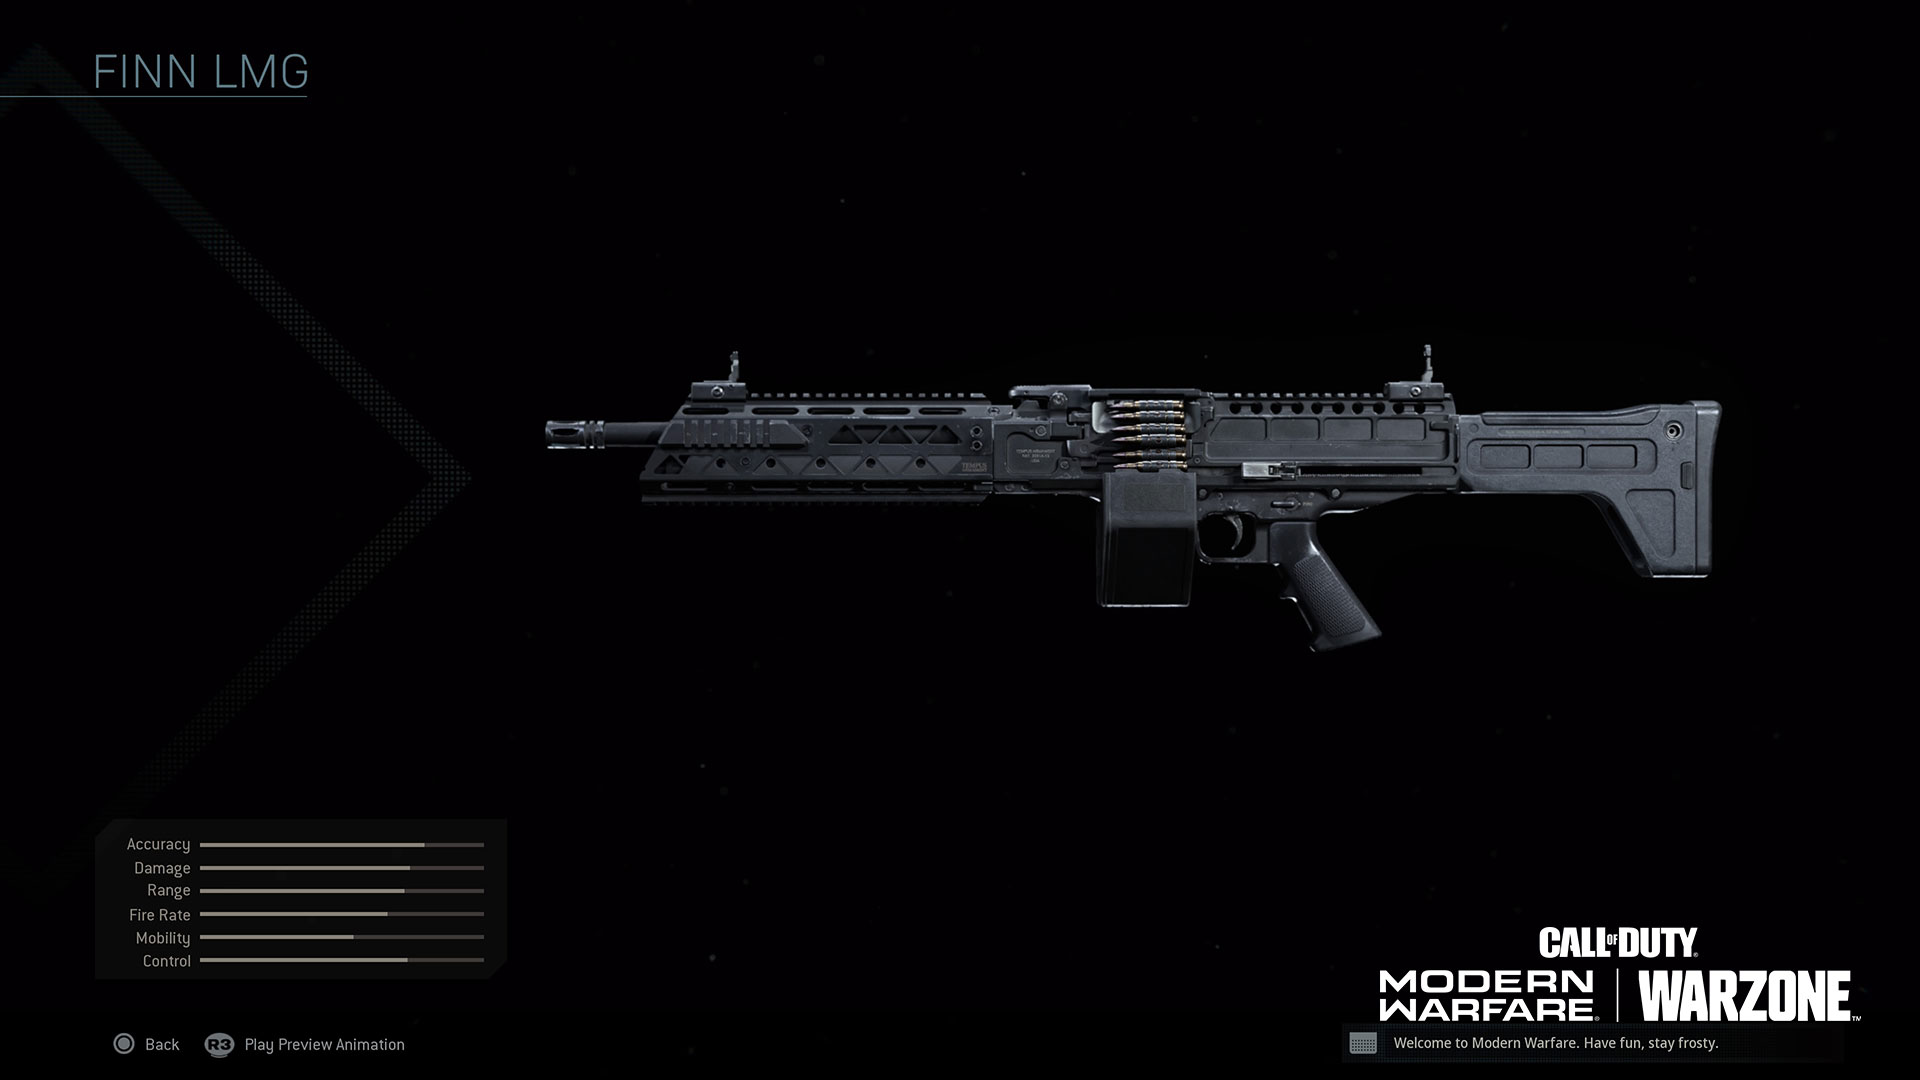 FiNN LMG: to Unlock New Monster LMG in Call of Duty®: Modern Warfare®